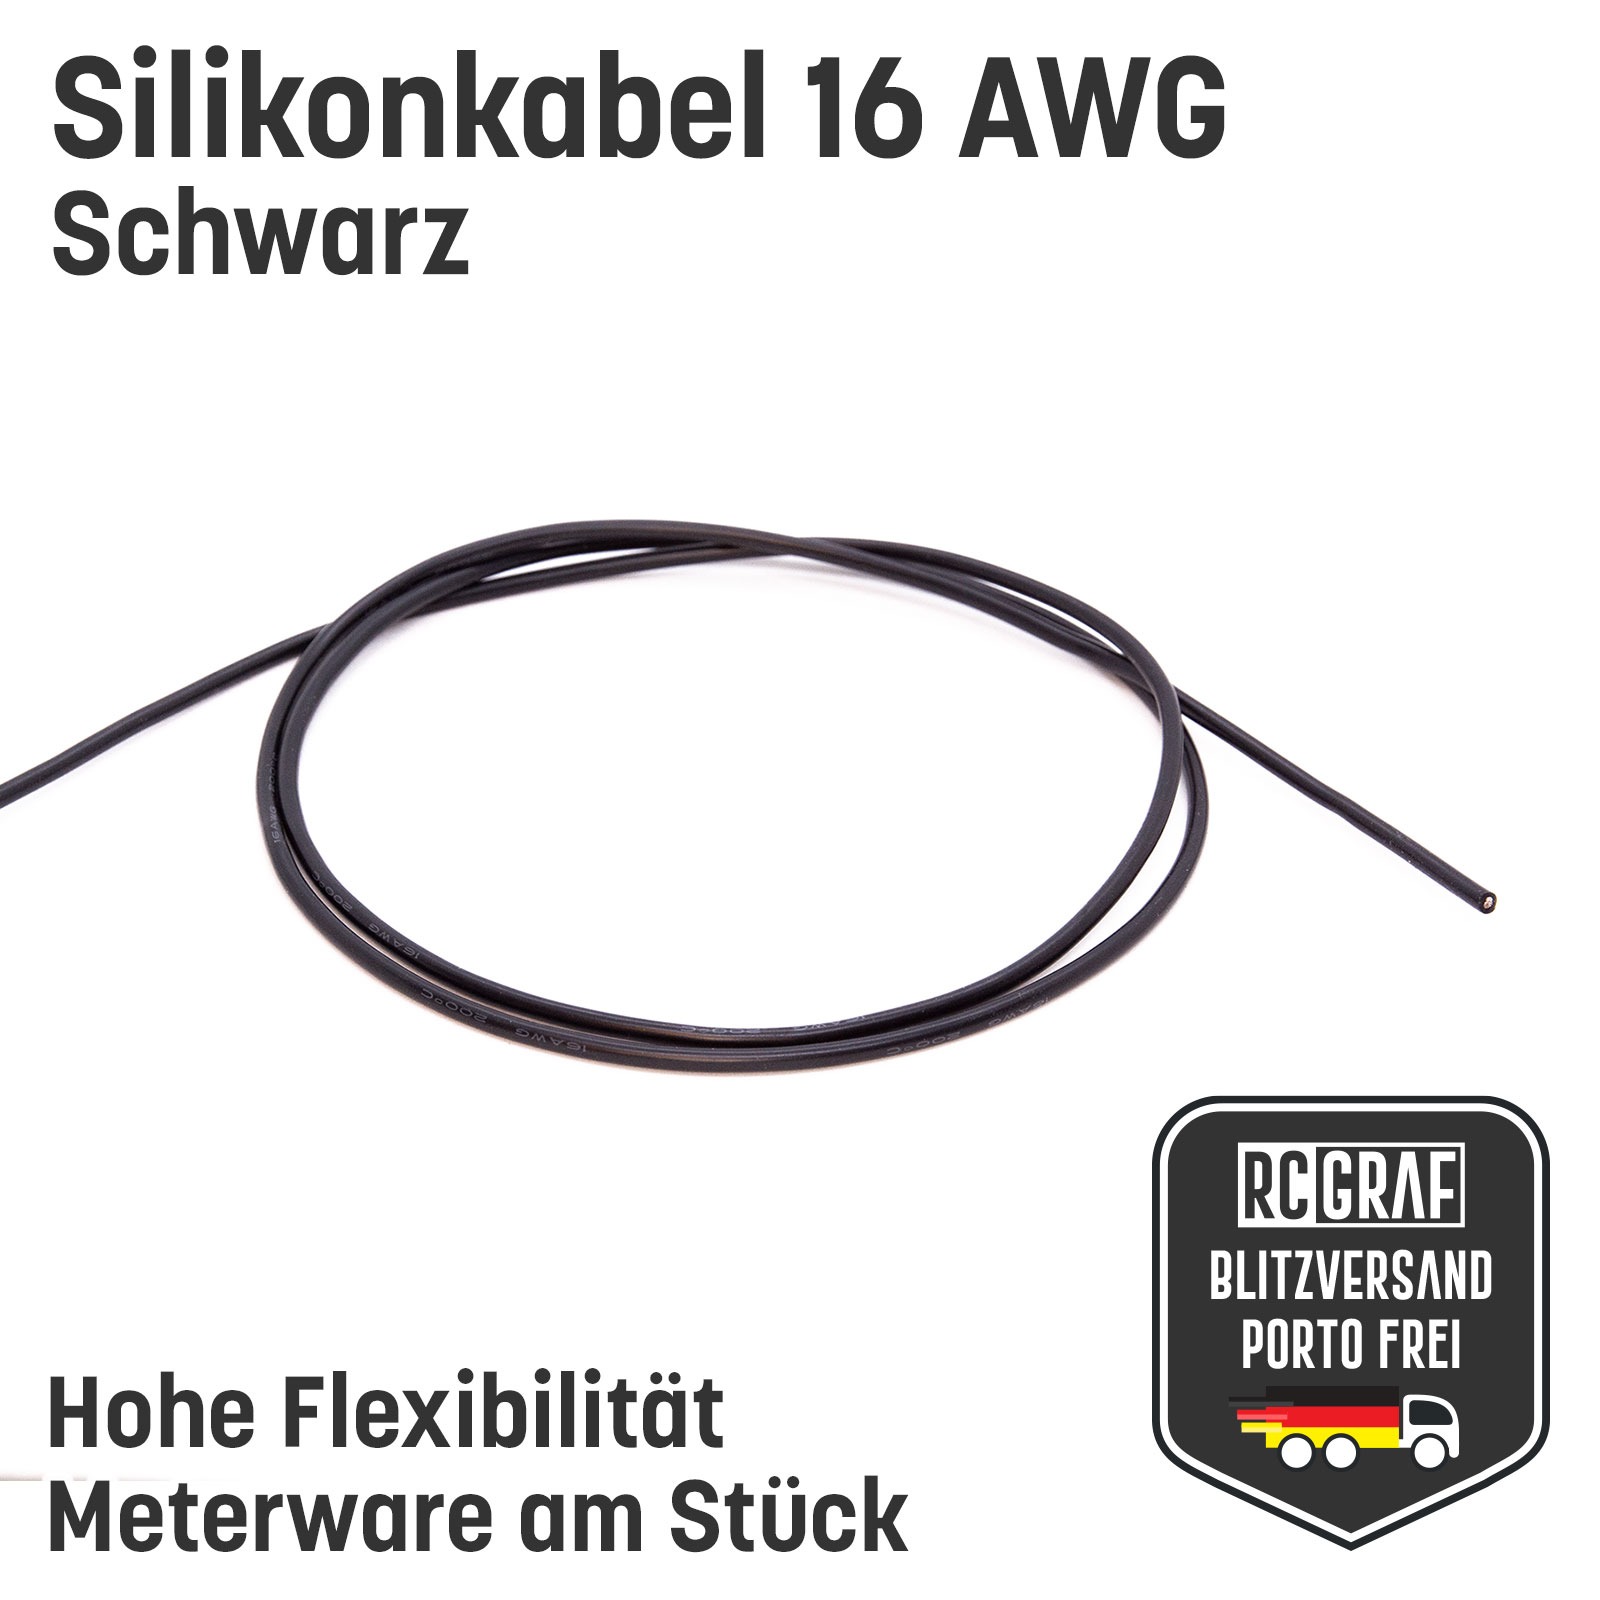 Silikonkabel 16 AWG 10 Meter Schwarz hochflexibel